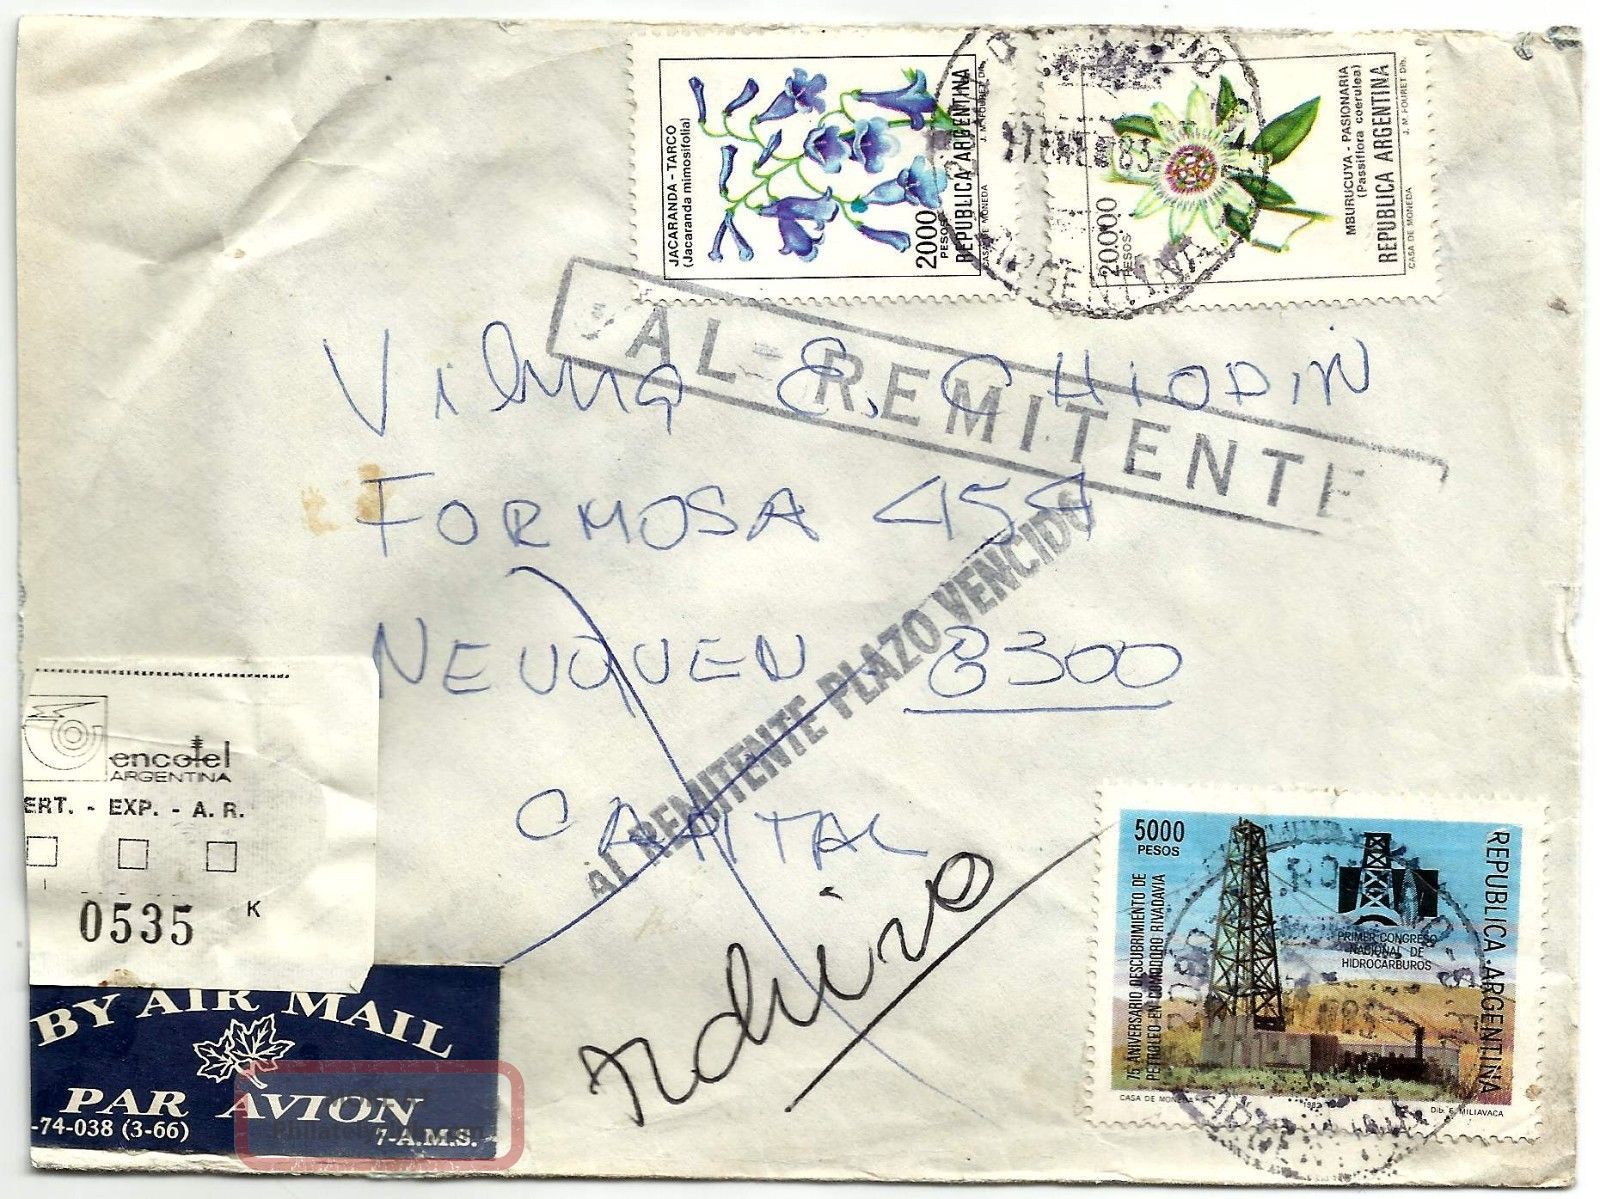 Rosario1983 Registered Inflation Rate Flowers & Oil Returned - Sender Airmail Latin America photo